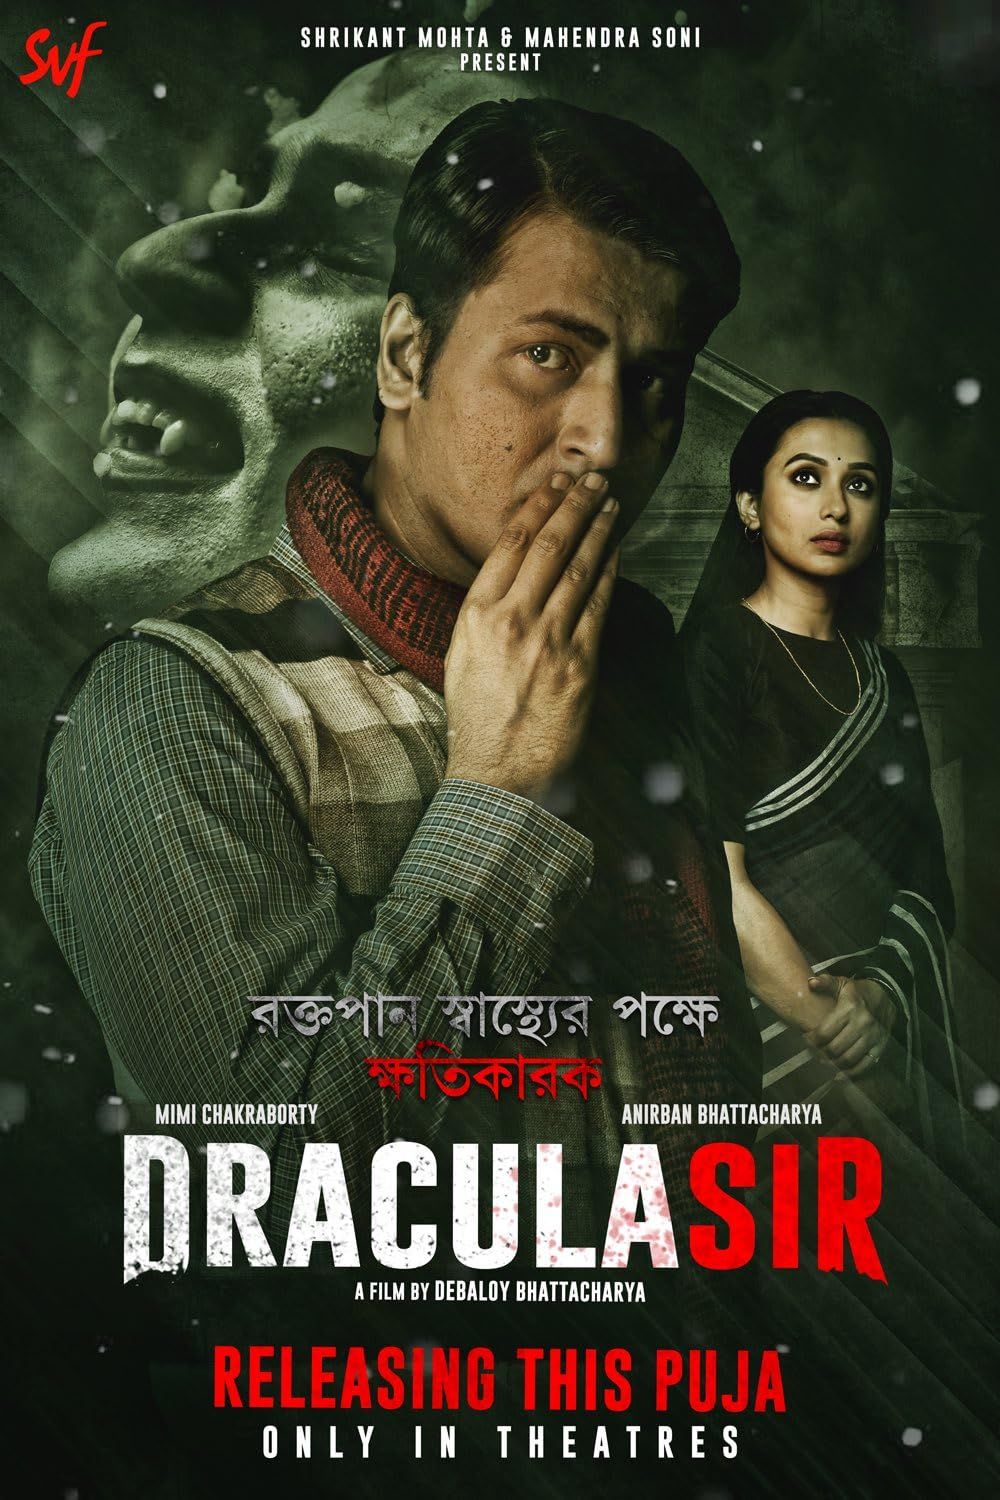 Dracula Sir (2020) Hindi Movie download full movie